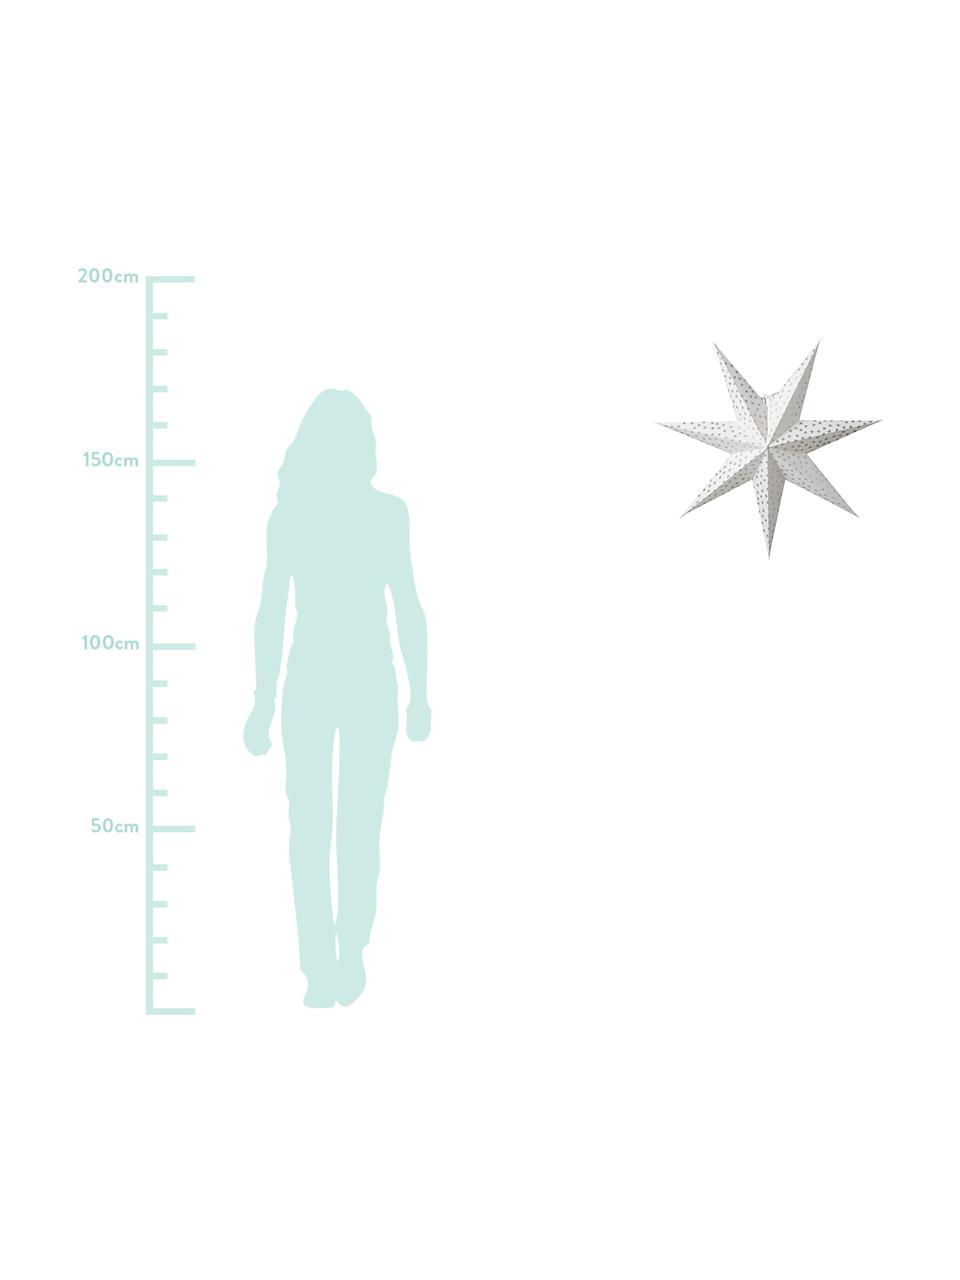 Estrella artesanal Asta, Papel, Blanco, plateado, Ø 60 cm